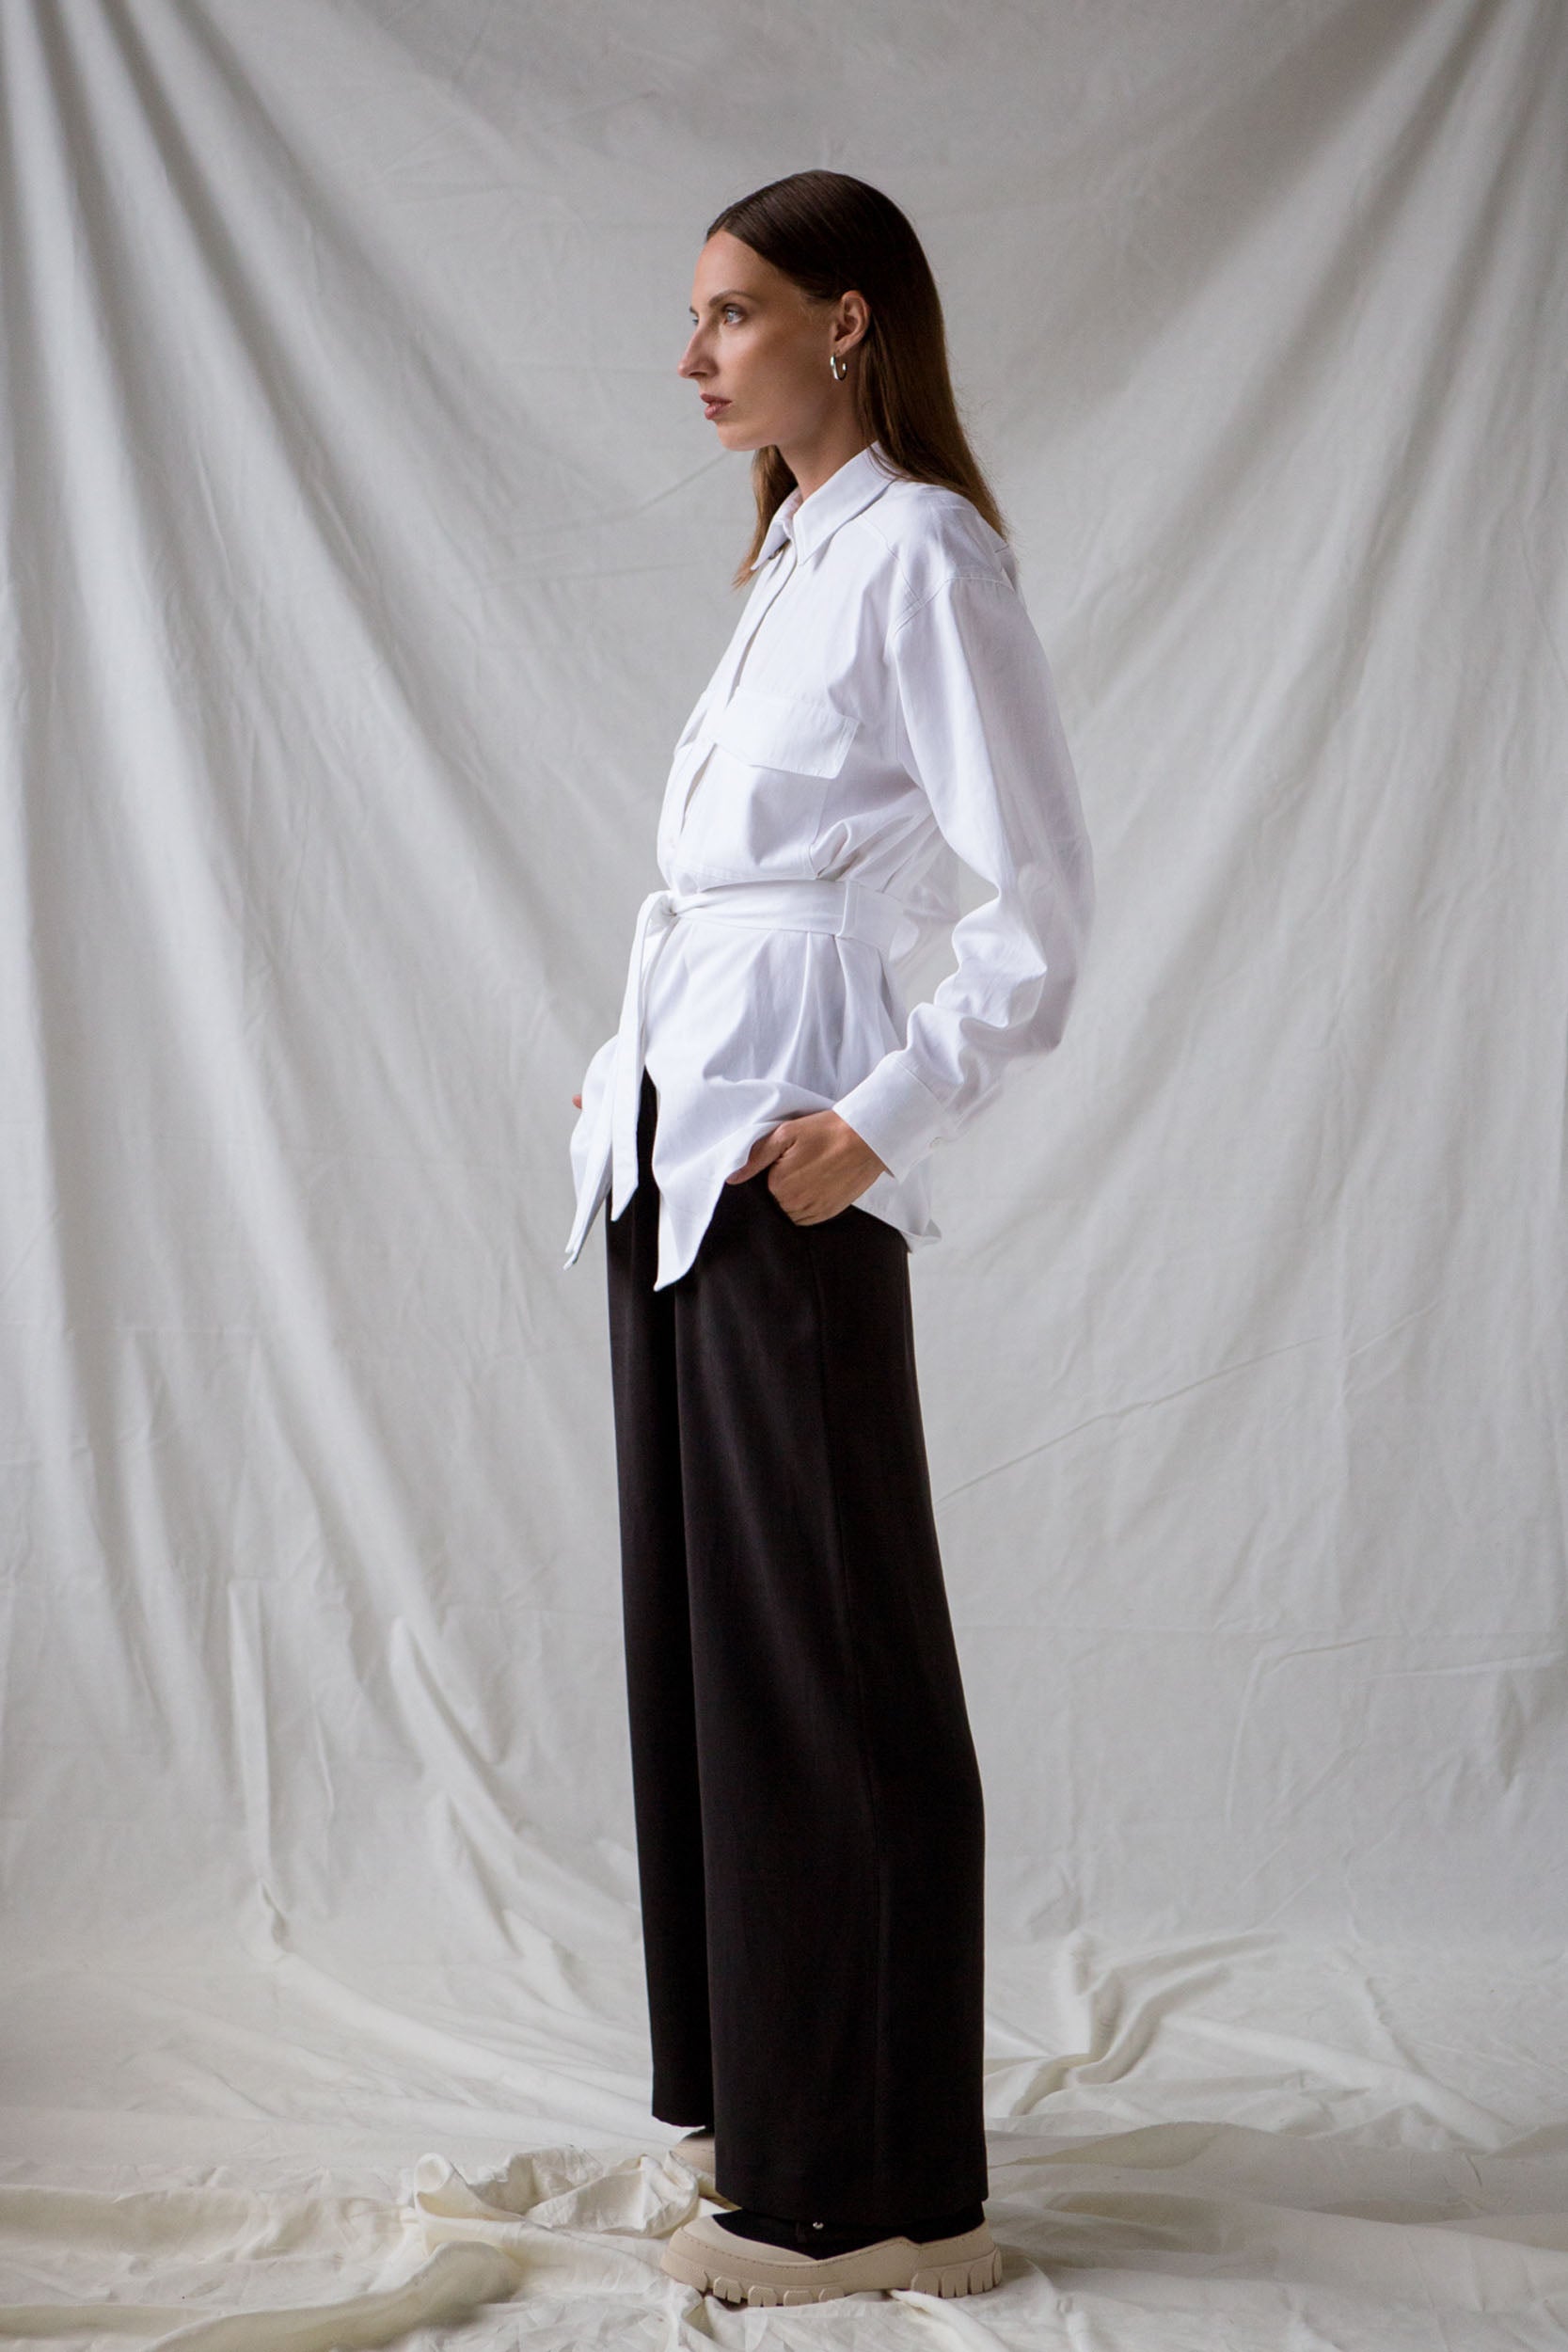 White organic over shirt and black tencel pants